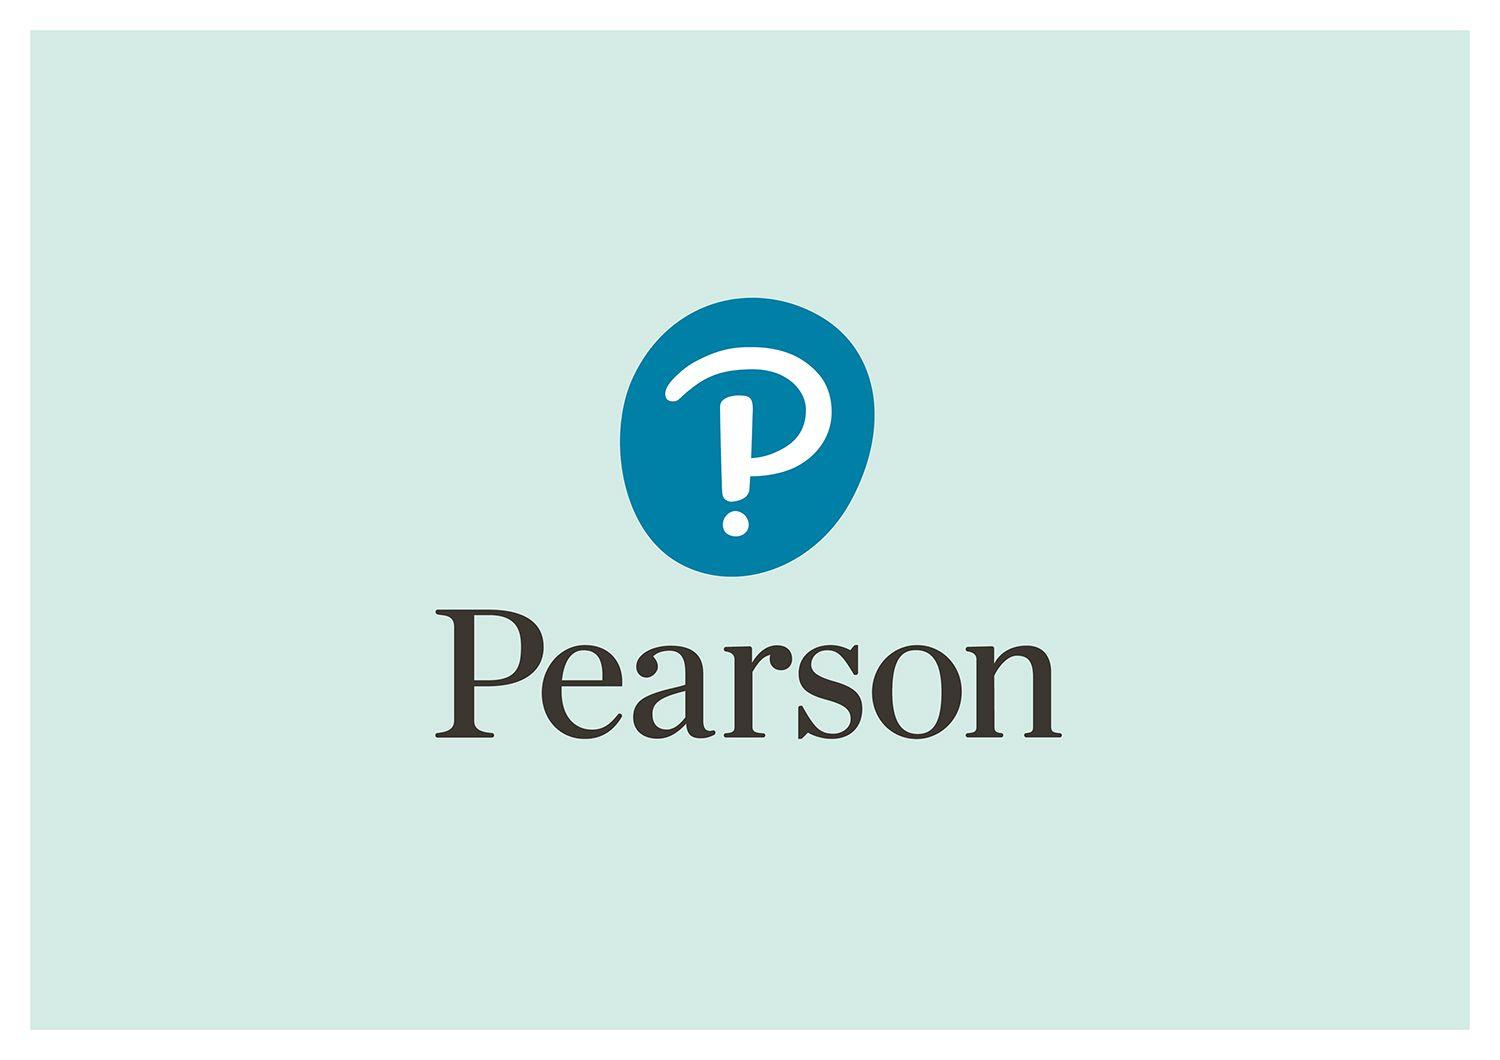 Pearson Logo - meets ! in new Pearson logo